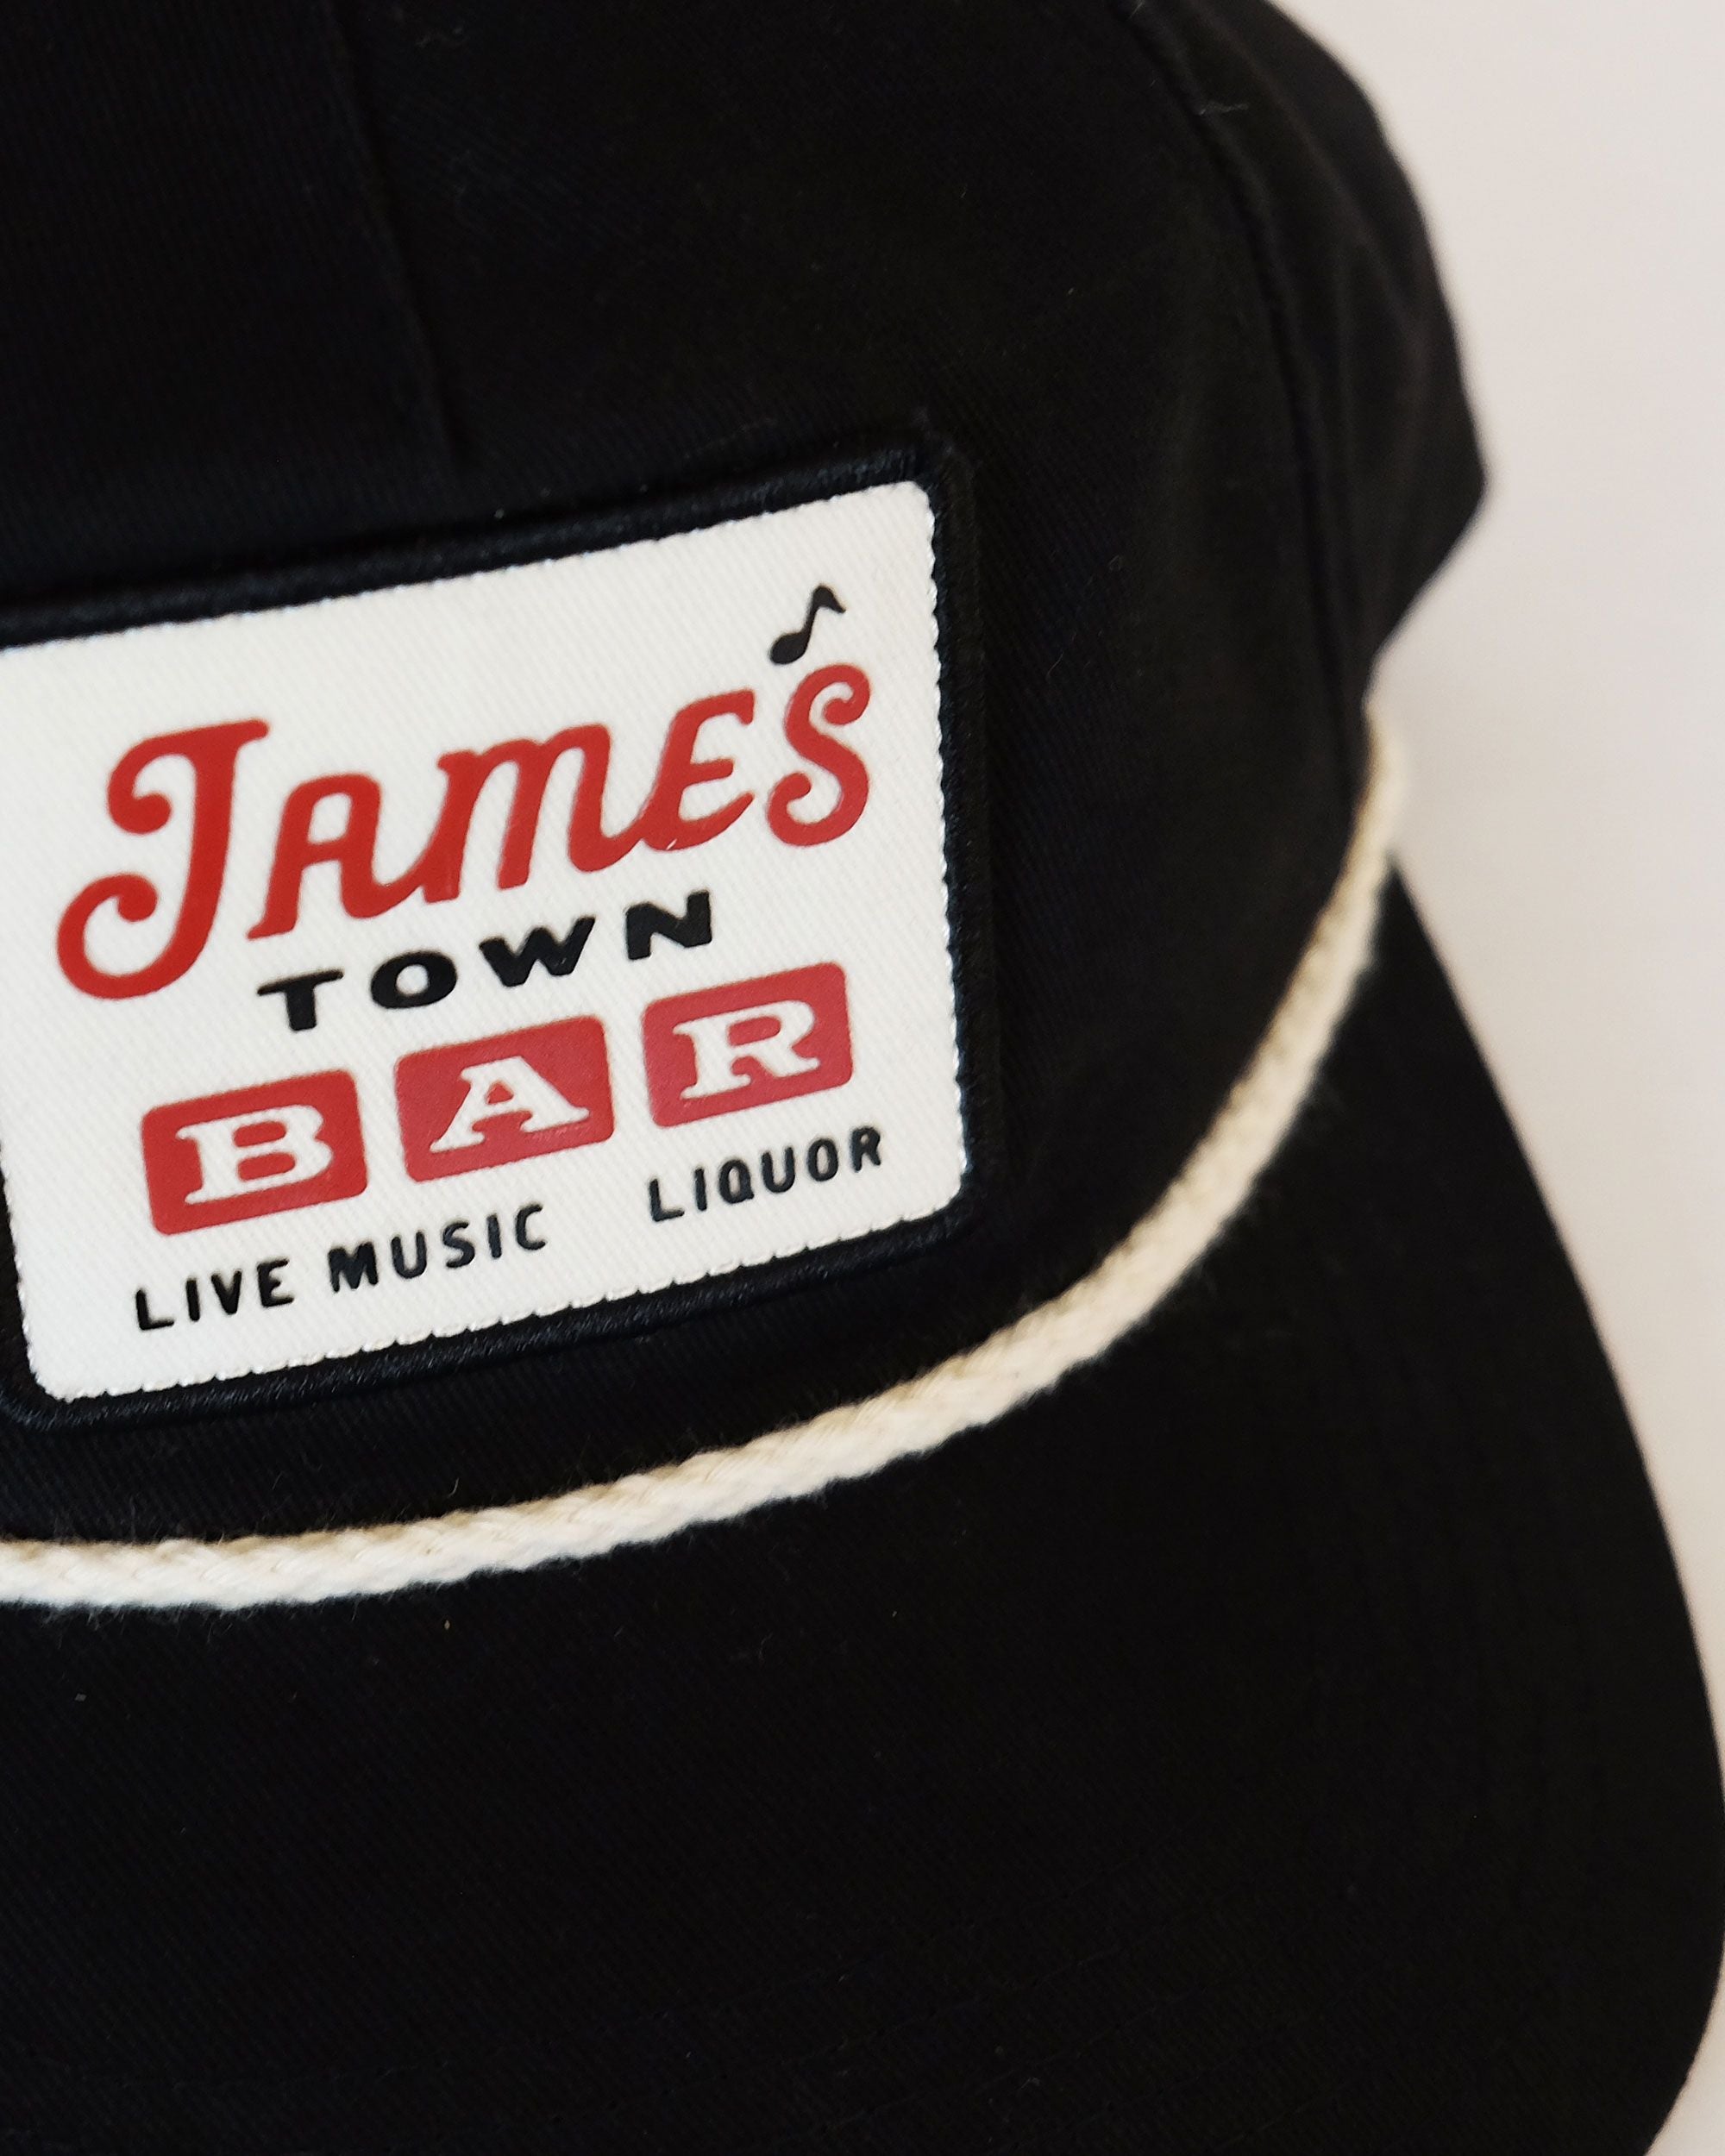 'James Town Bar' patch hat